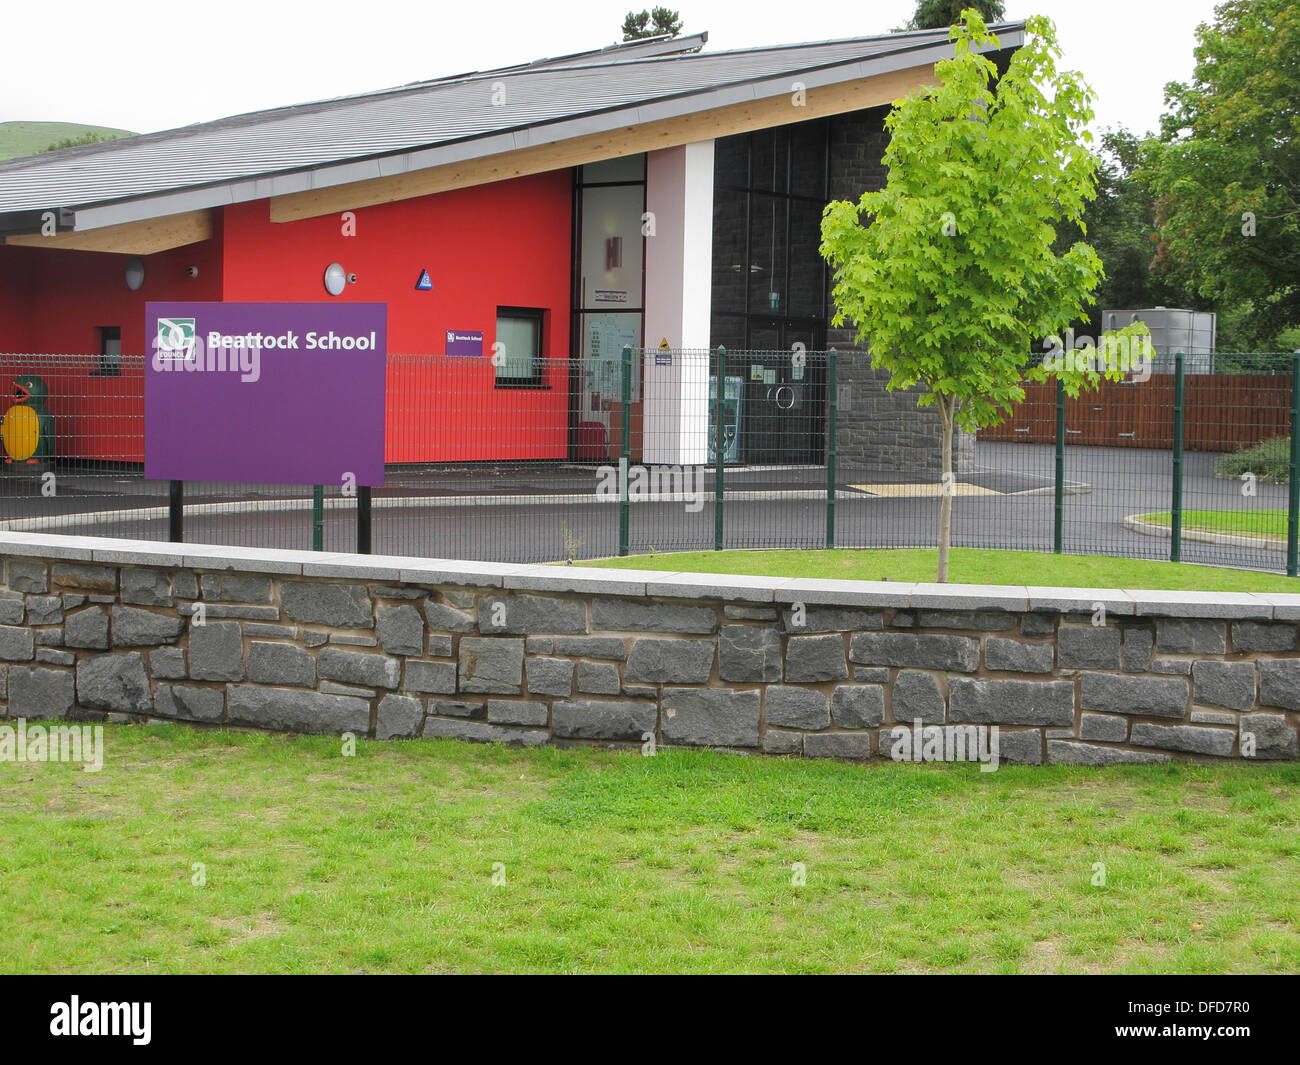 Beattock Primary School, Beattock, Dumfries and Galloway, Scotland, UK Stock Photo